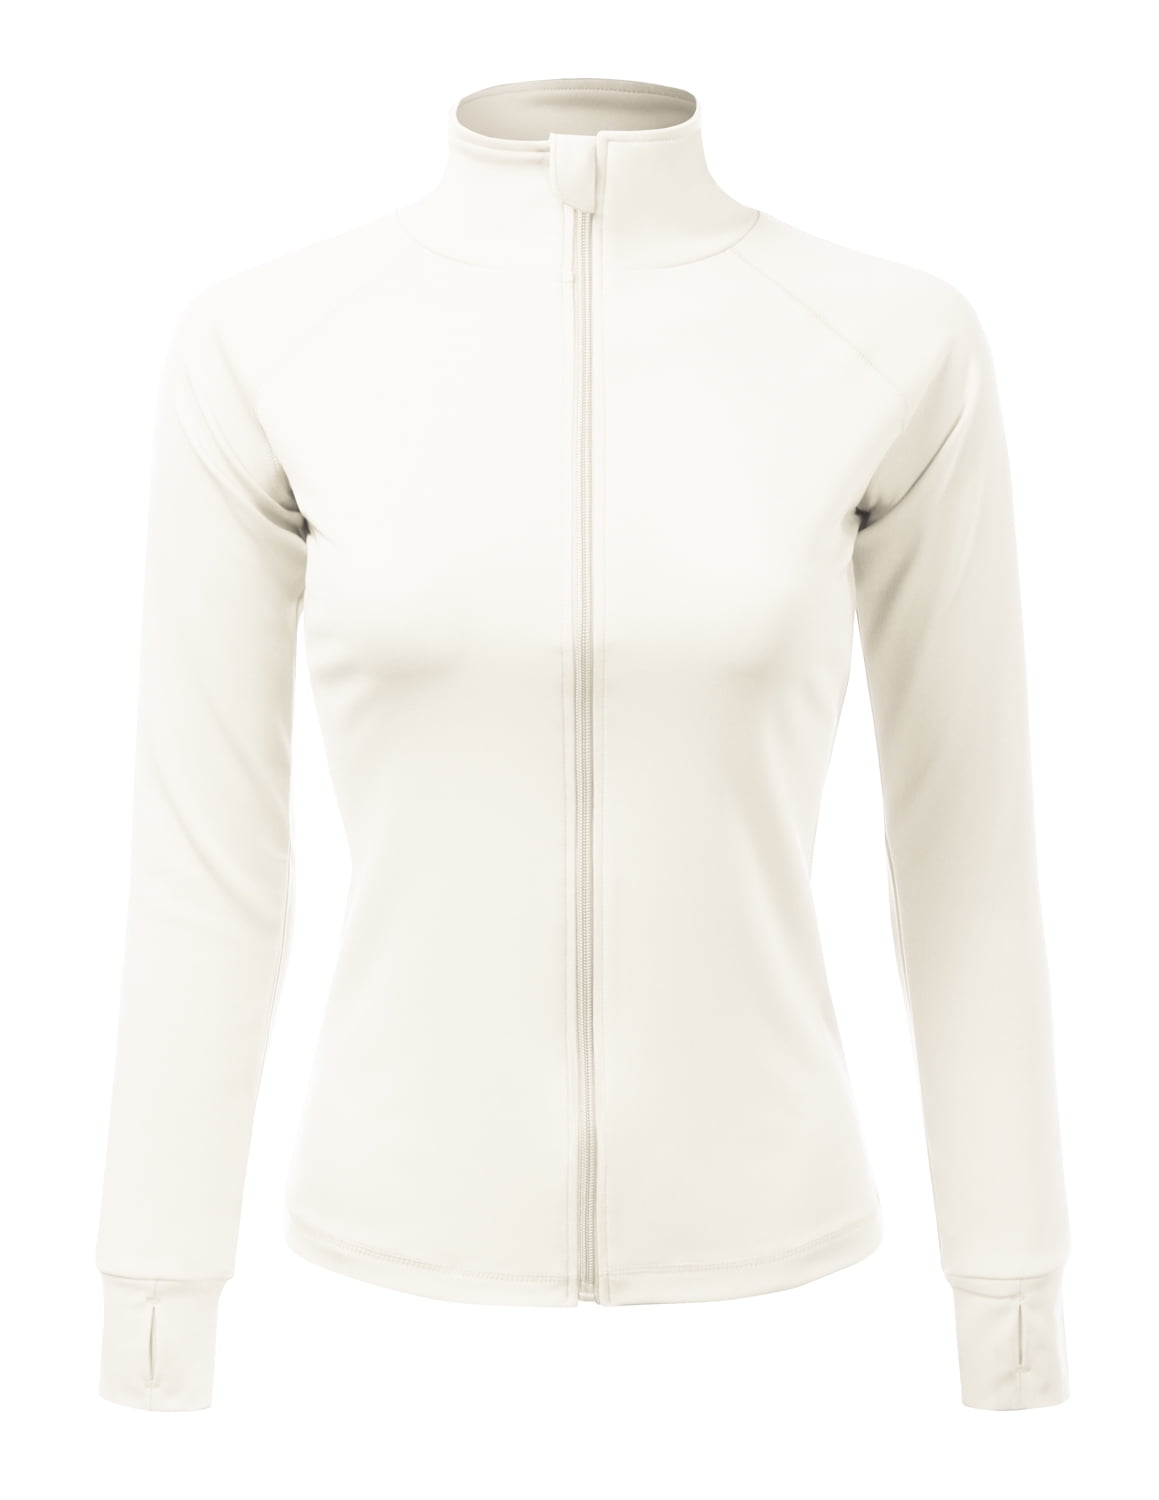 Doublju - Doublju Women's Athletic Jackets Full-Zip Workout Active Sports  Coats with Thumb Holes WHITE 2XL Plus Size - Walmart.com - Walmart.com